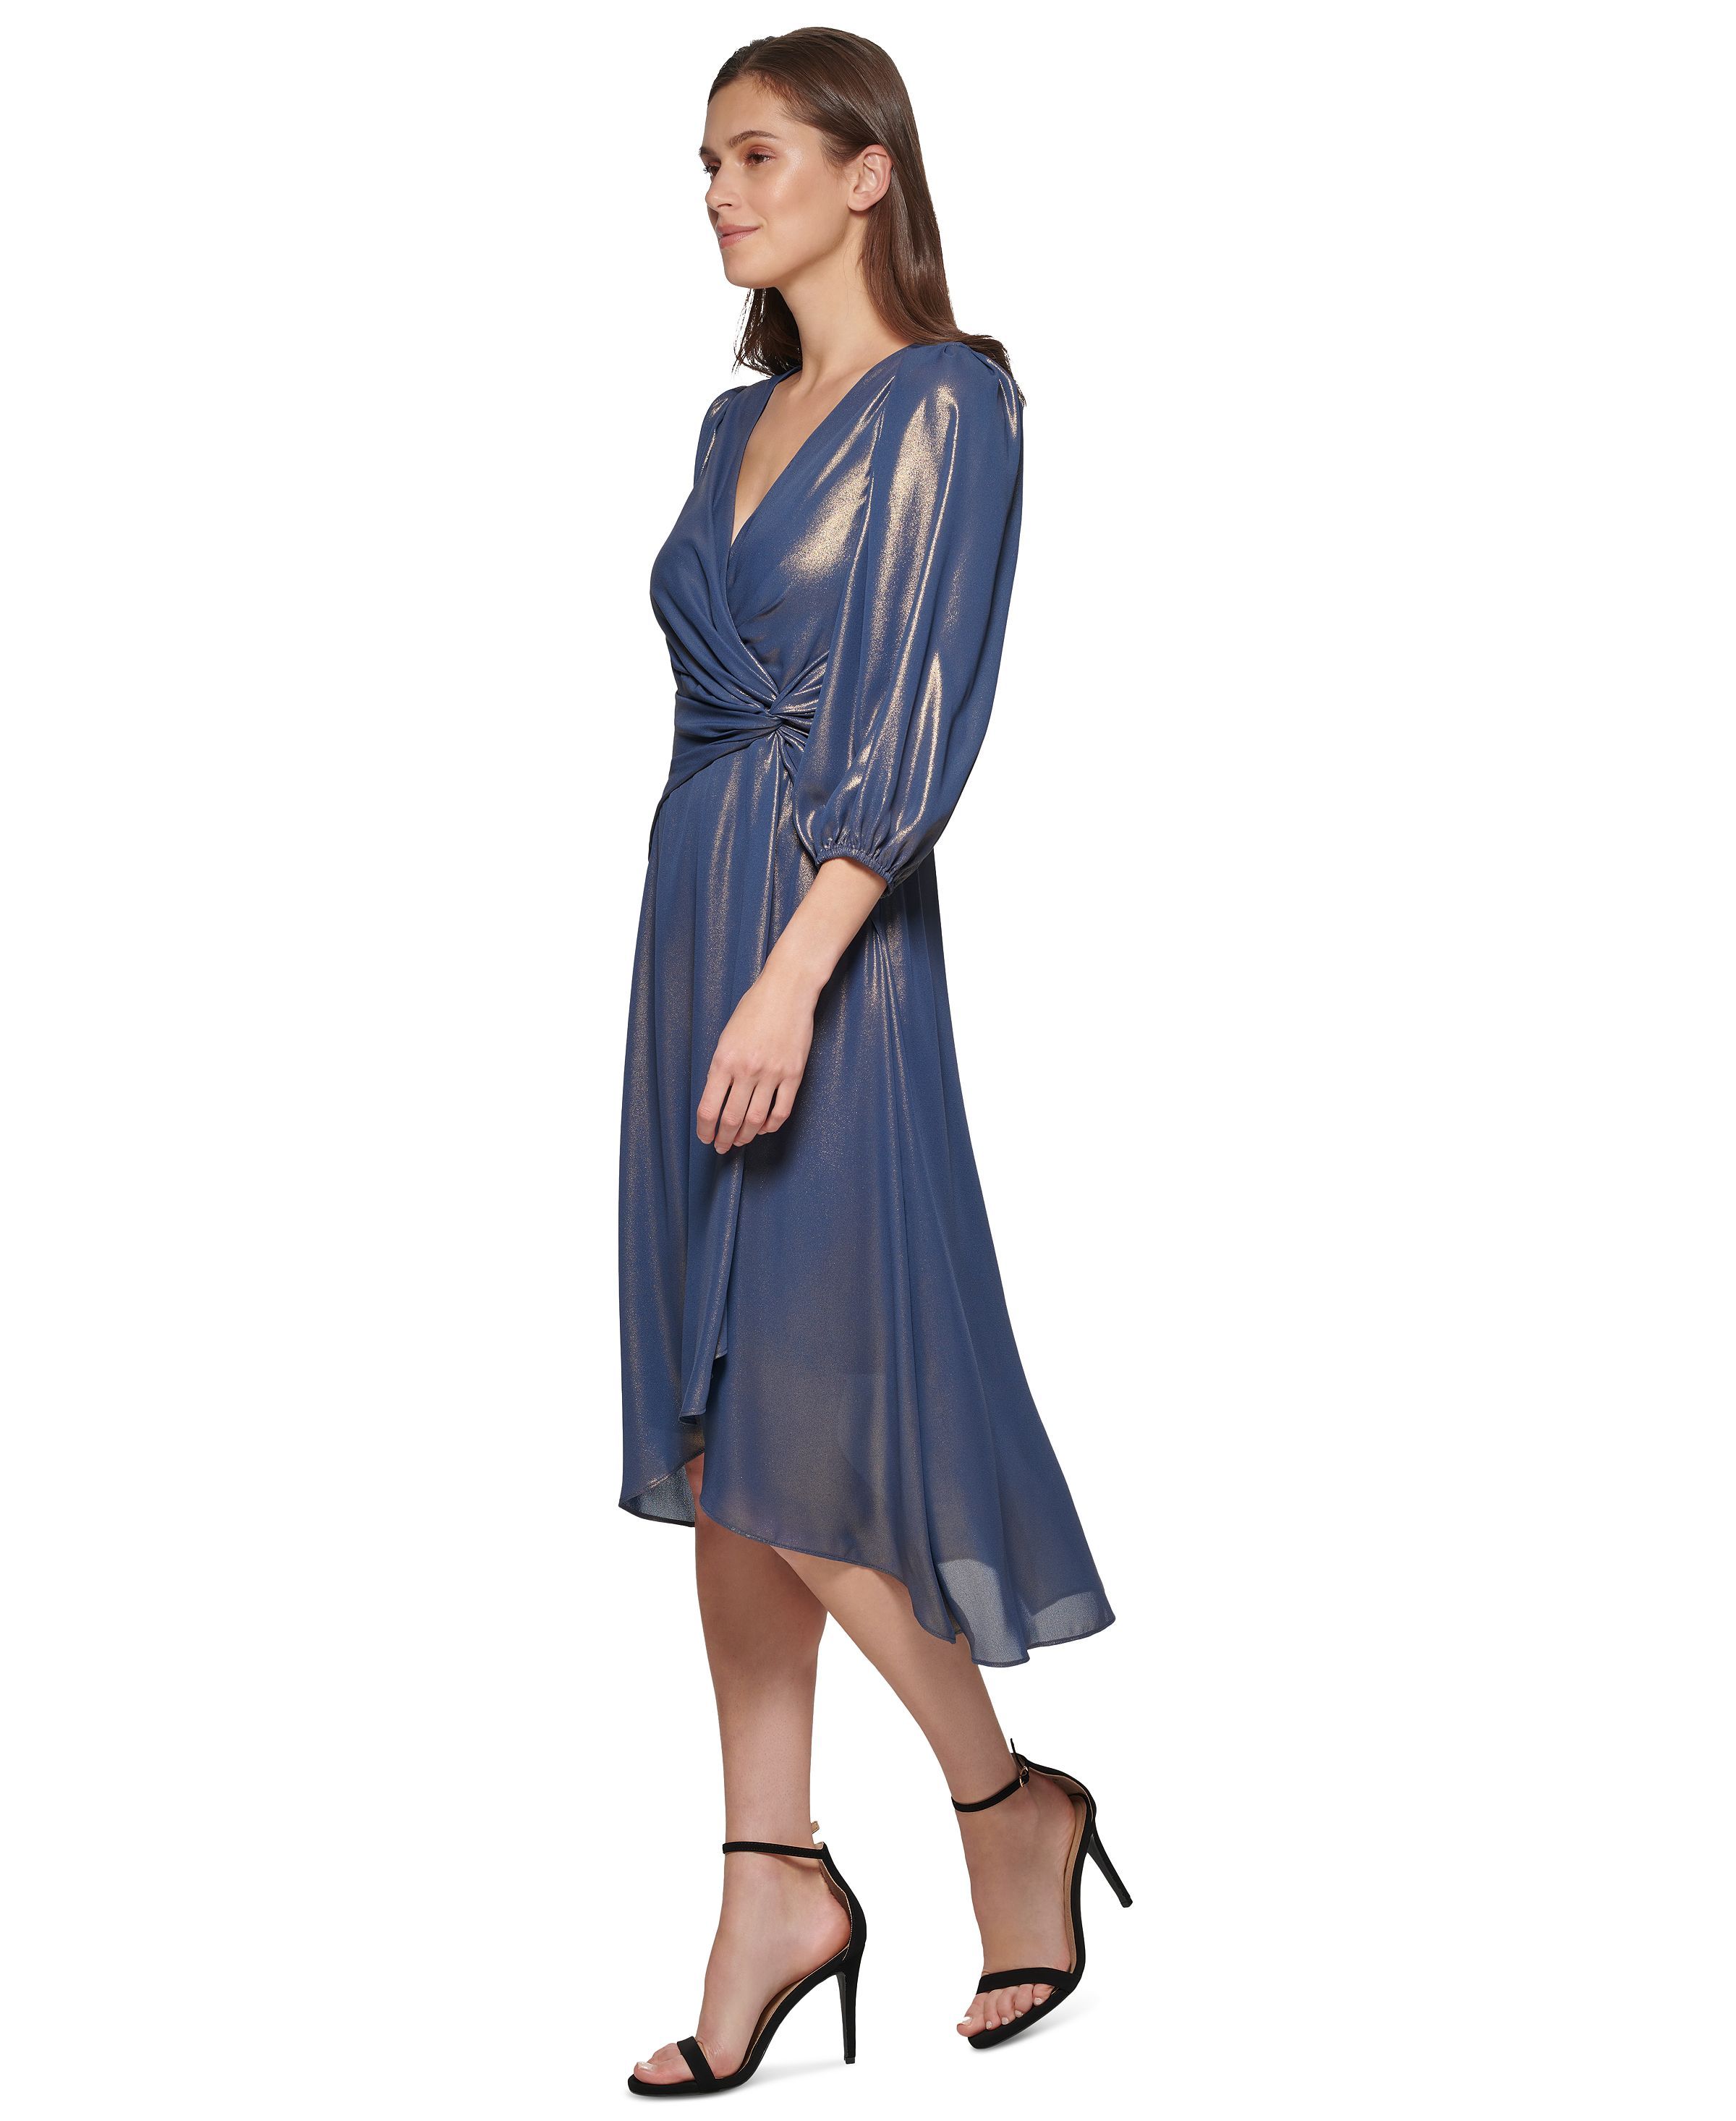 DKNY Women's Dress Sz 16 Iridescent Twisted Balloon-Sleeve Blue